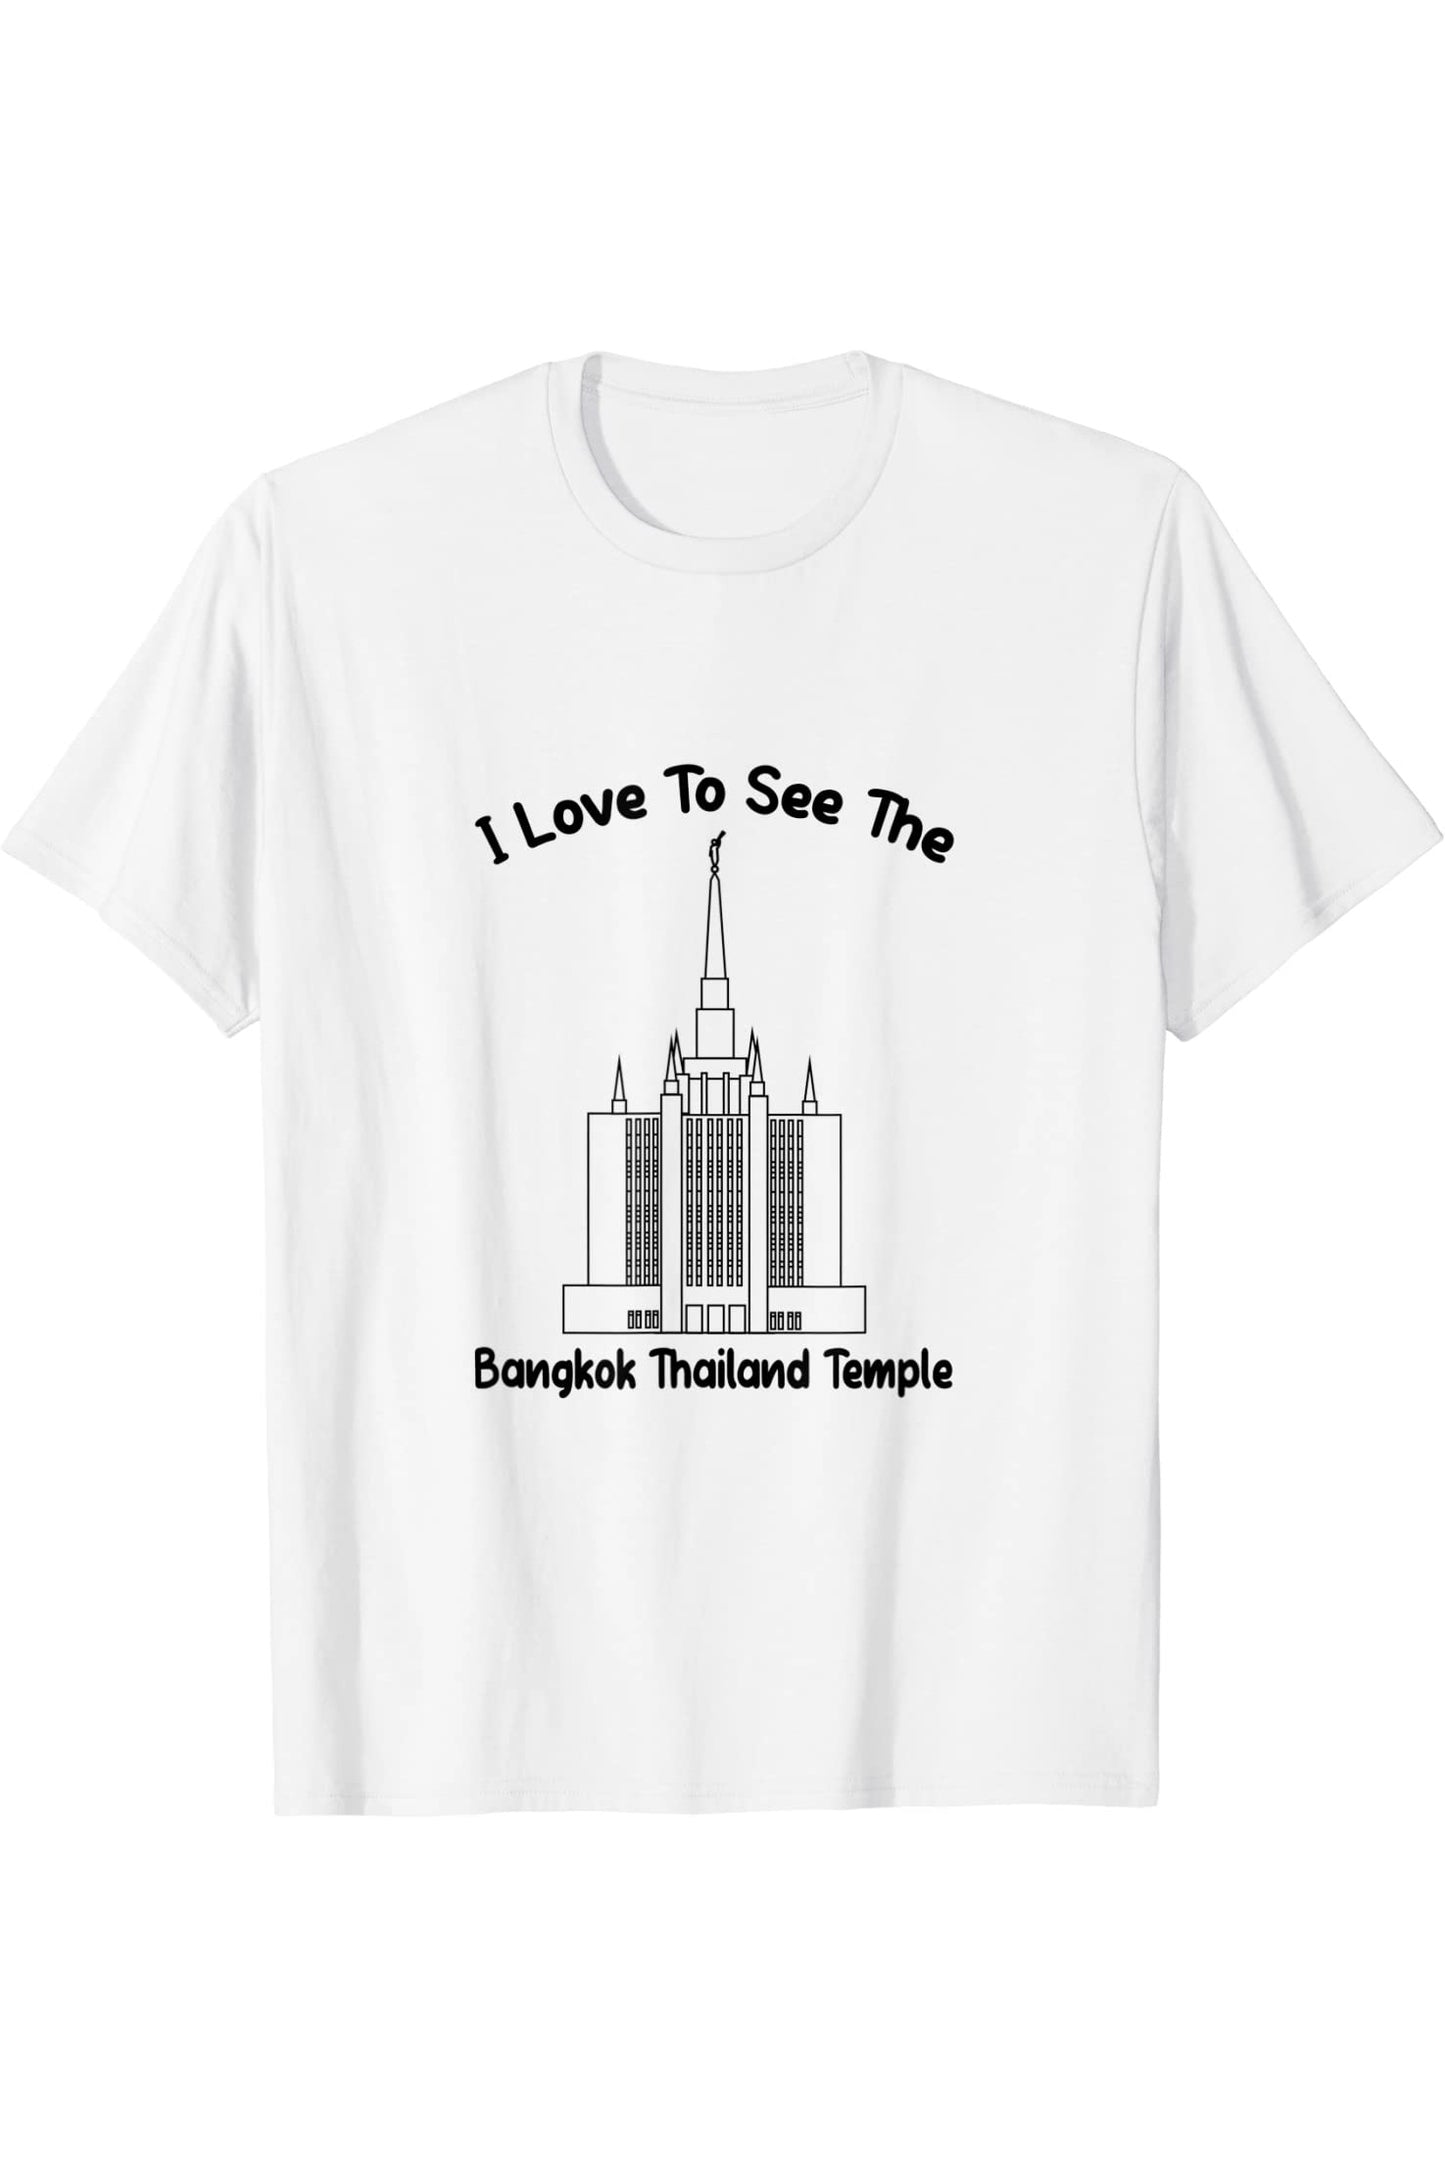 Bangkok Thailand Temple T-Shirt - Primary Style (English) US